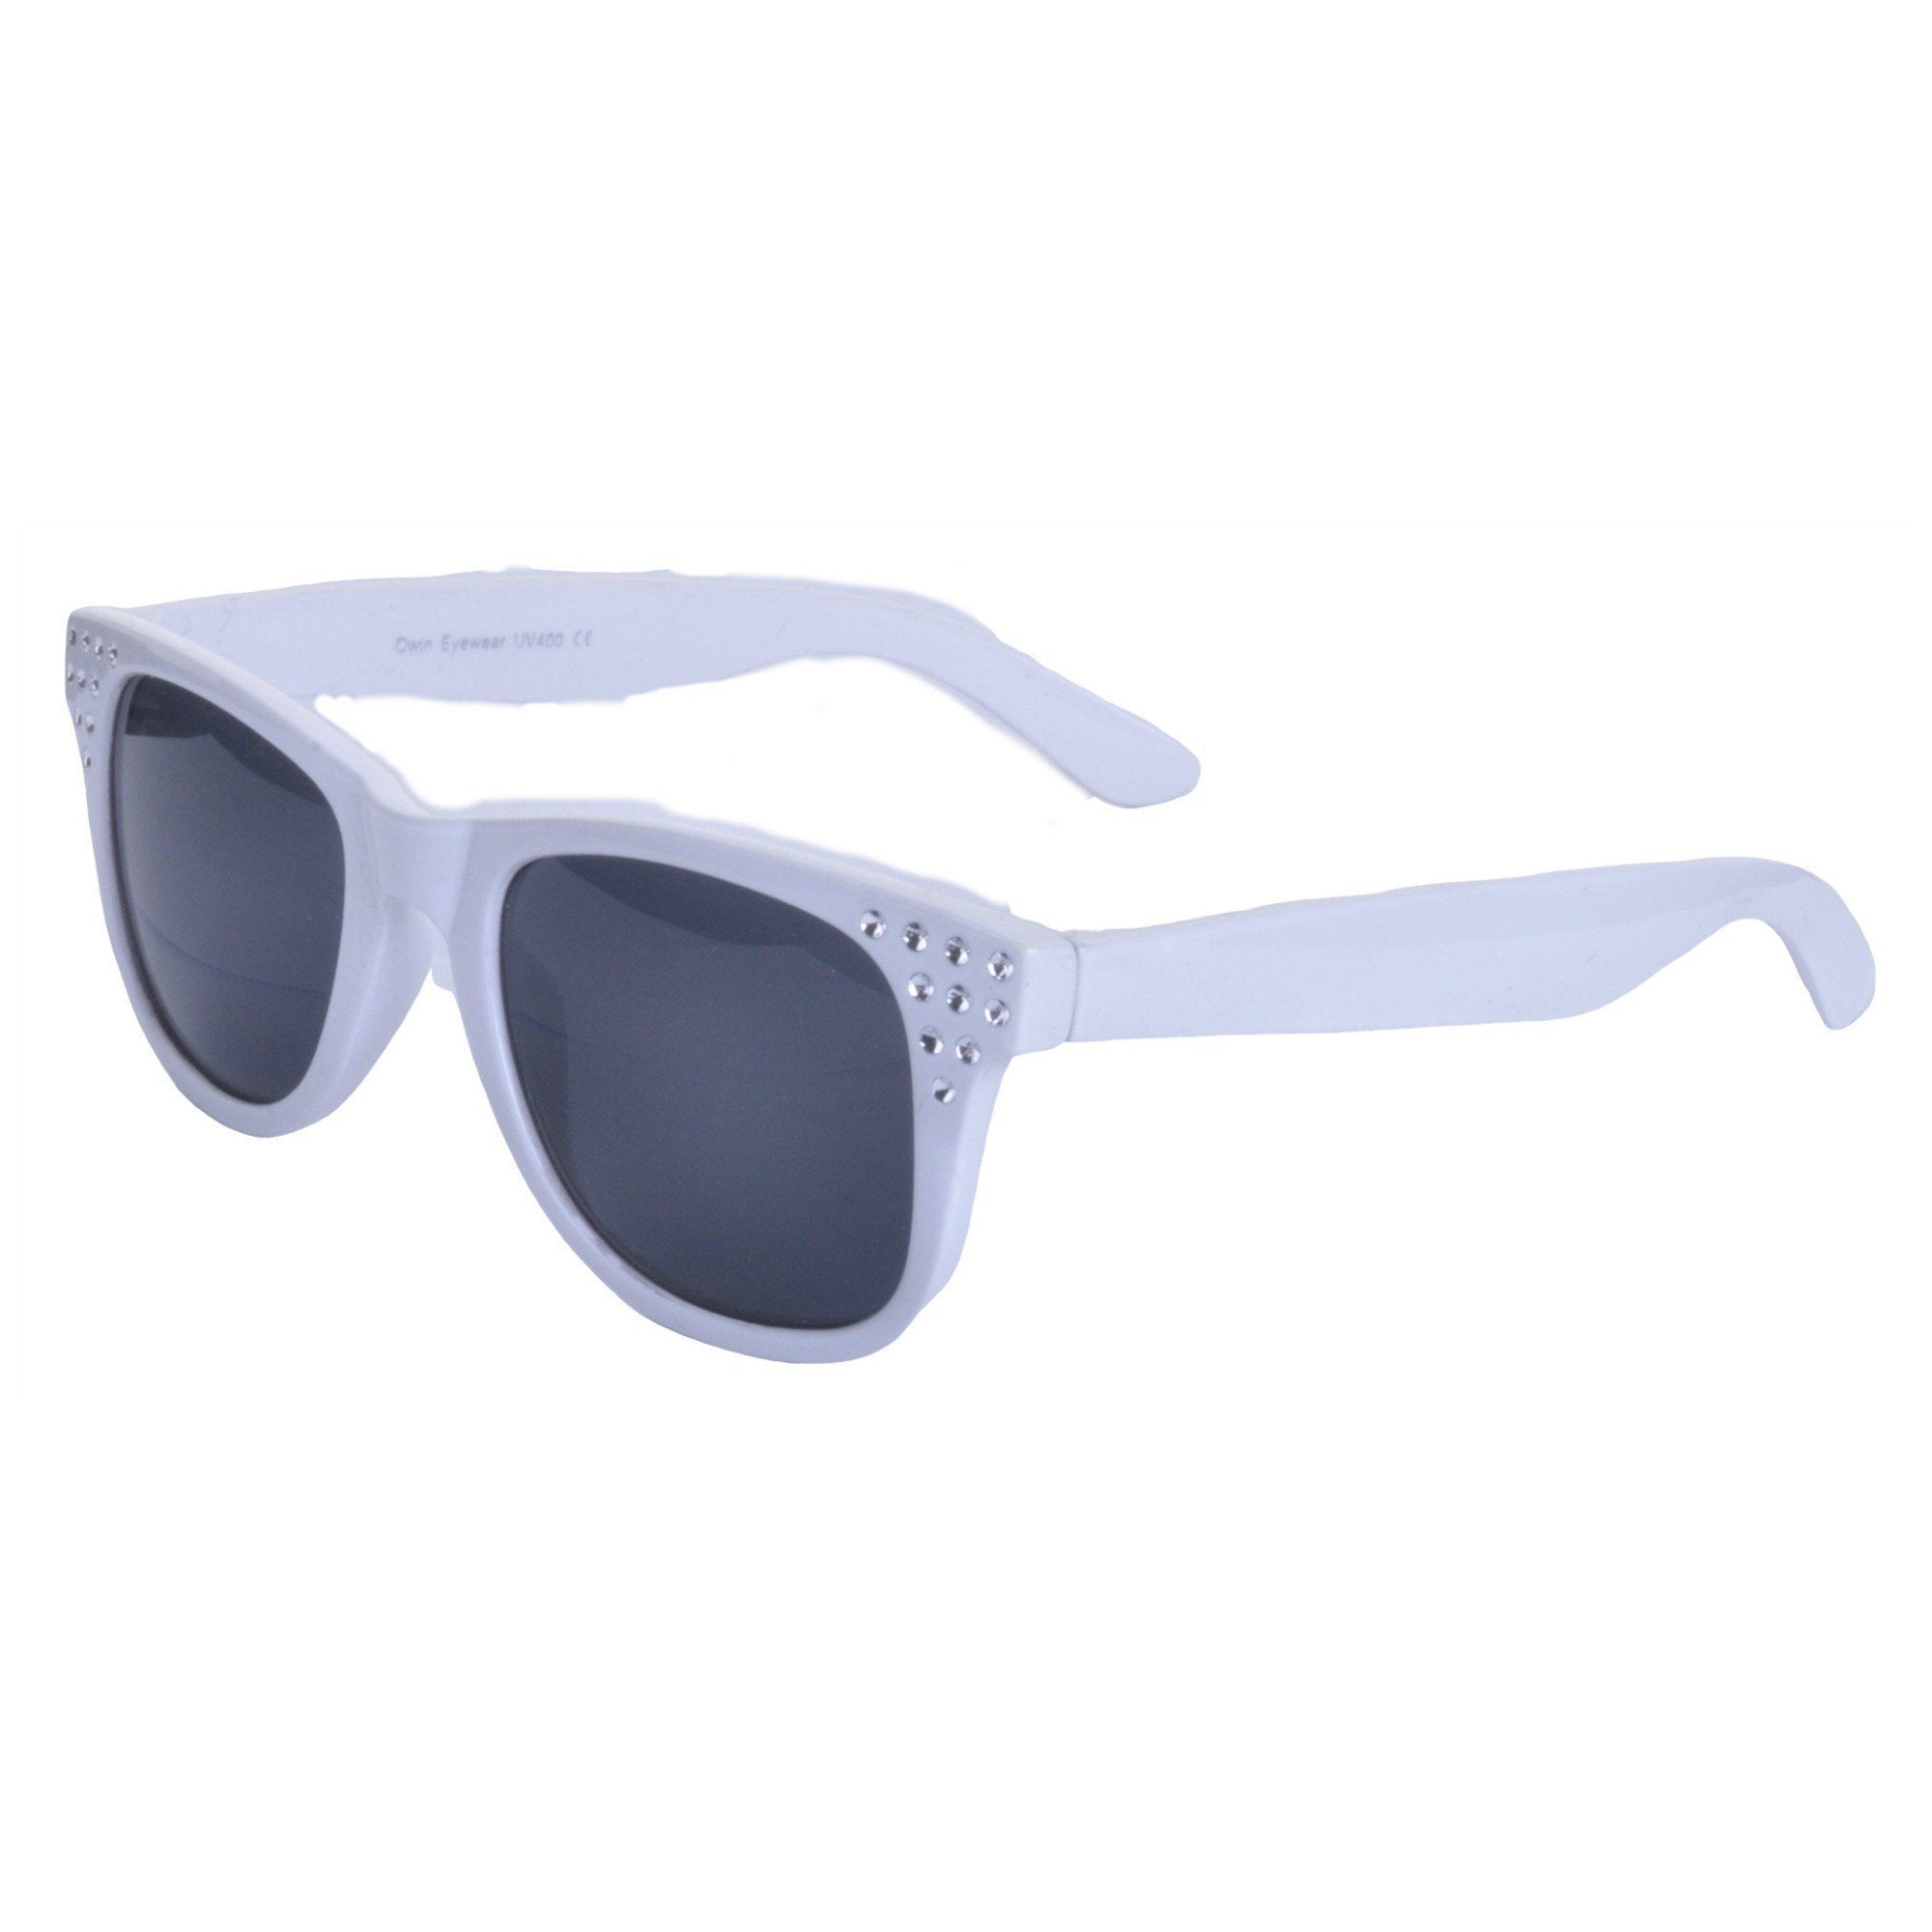 Buy ARICKS® Retro Vintage Fashion Narrow Cat Eye Rectanglular Clout Goggles  Plastic Frame Sunglasses for Women Men (Black & White) at Amazon.in